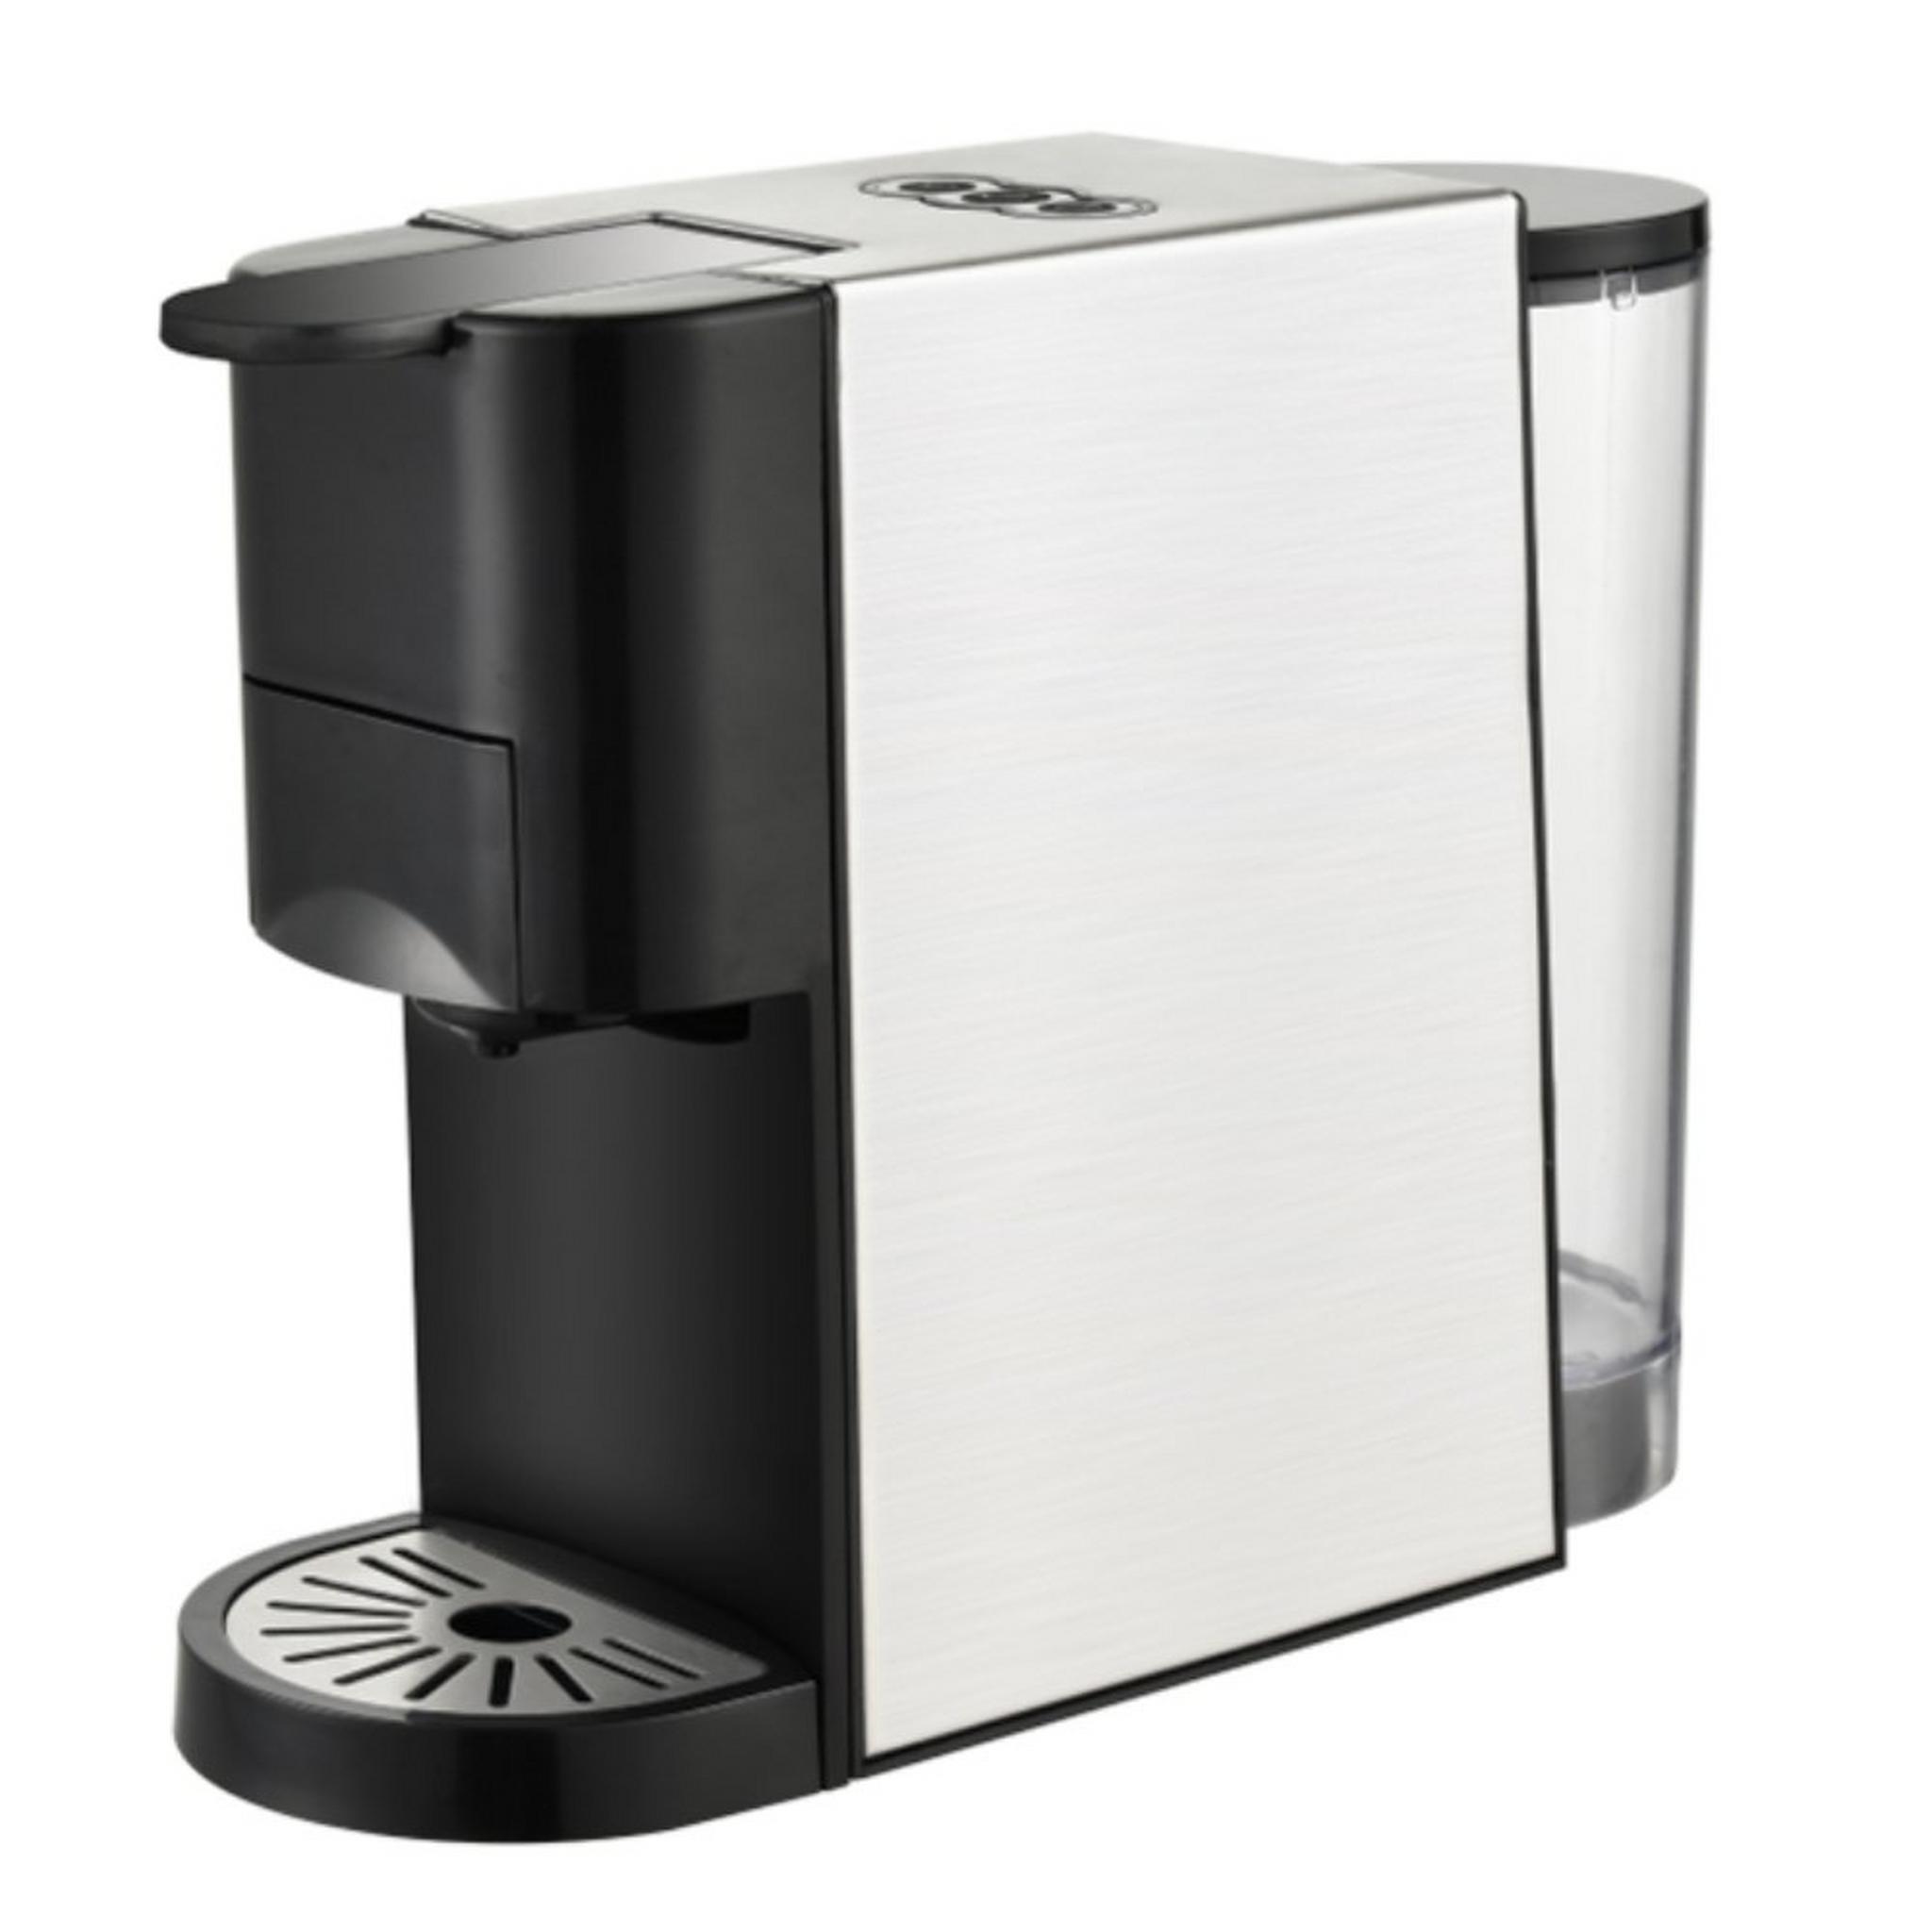 Wansa Multi Capsules Coffee Machine,1450W, 0.8L, AC-513K - Black/Silver